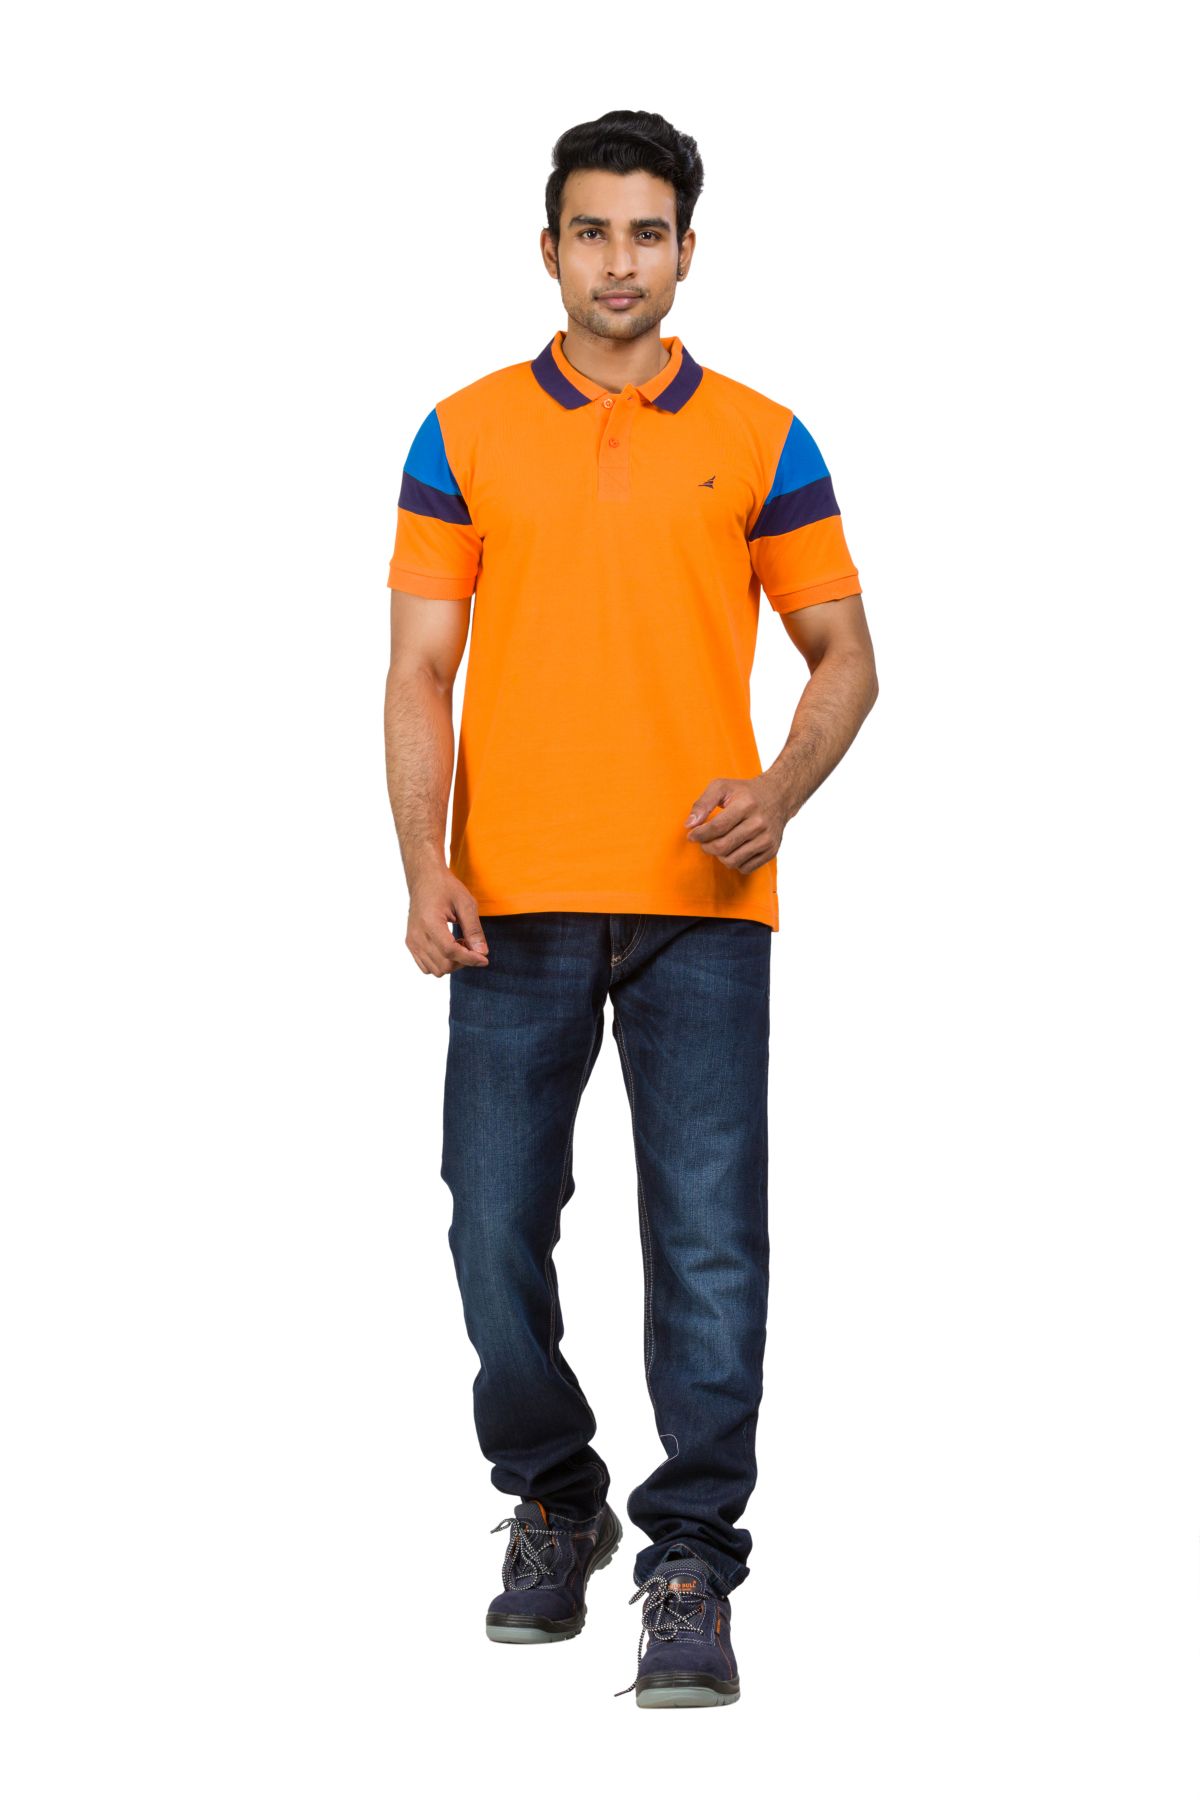 Cotton Blend Polo T-shirt Orange-Blue-Black For Men